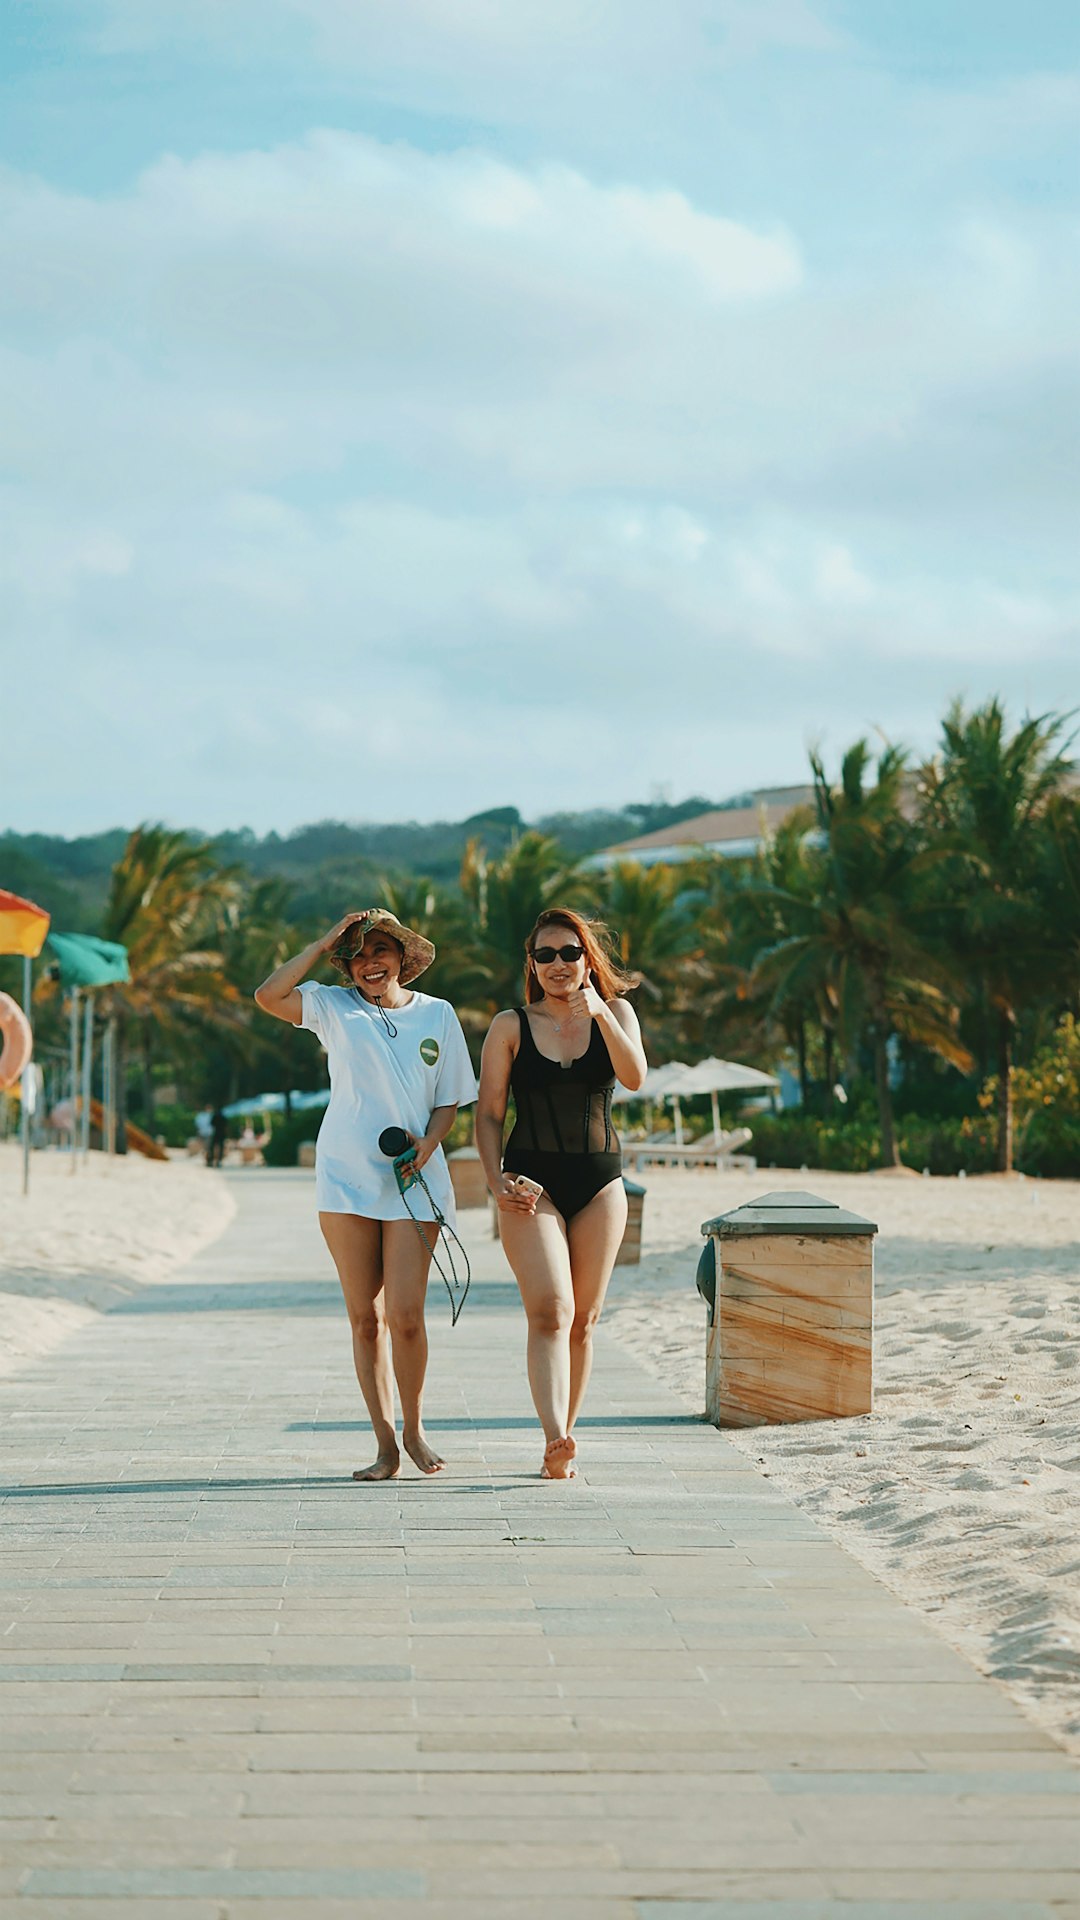 2 women standing on beach during daytime